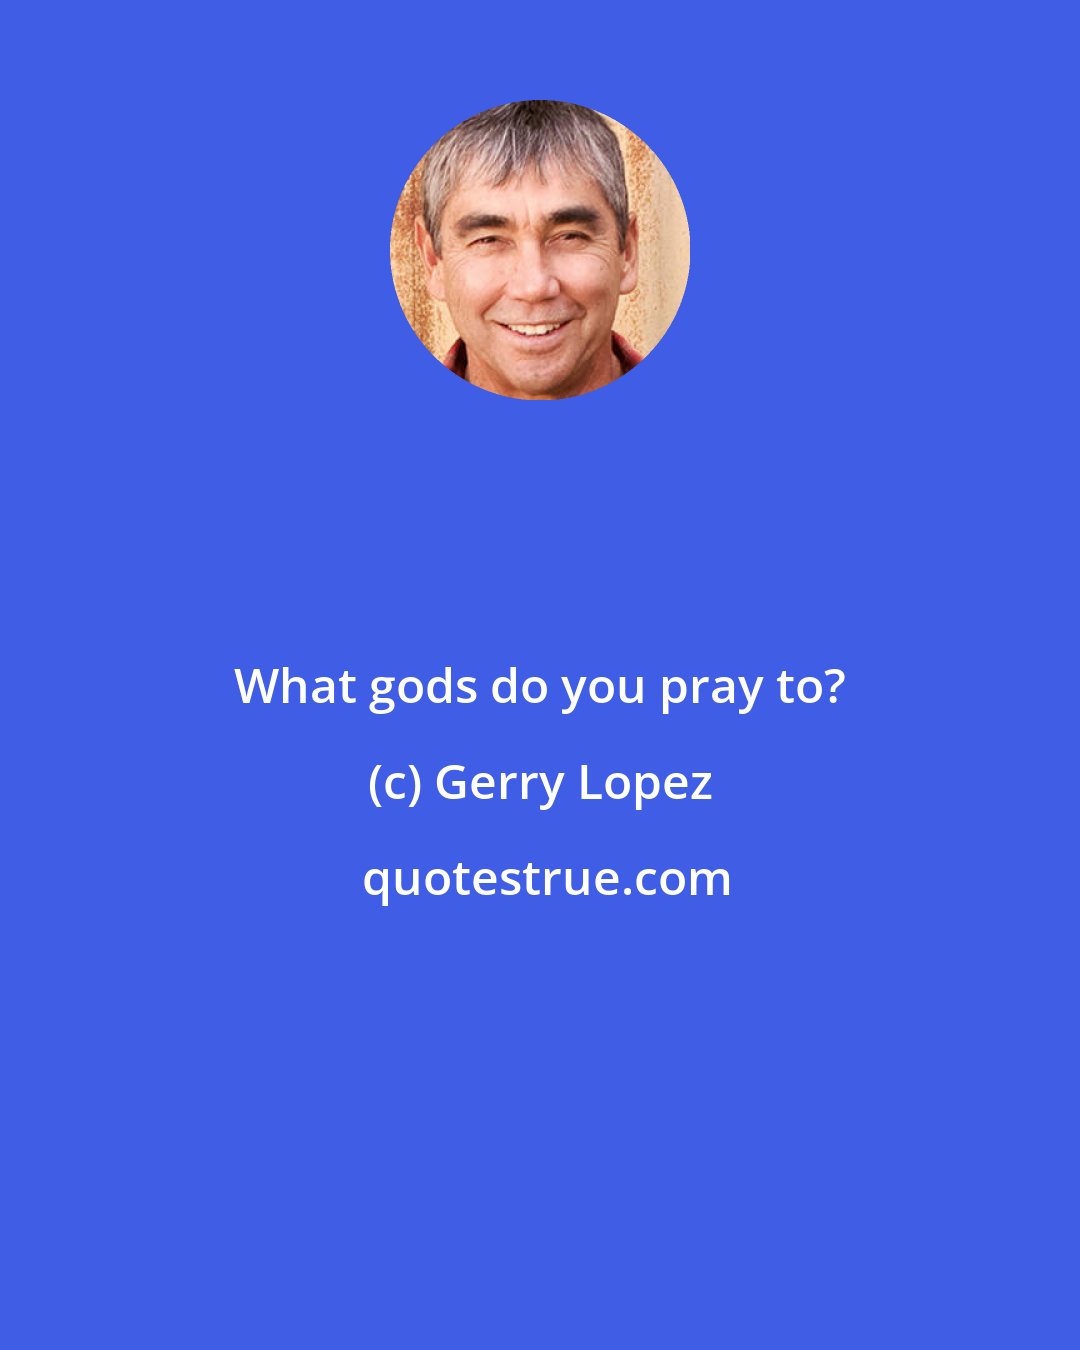 Gerry Lopez: What gods do you pray to?